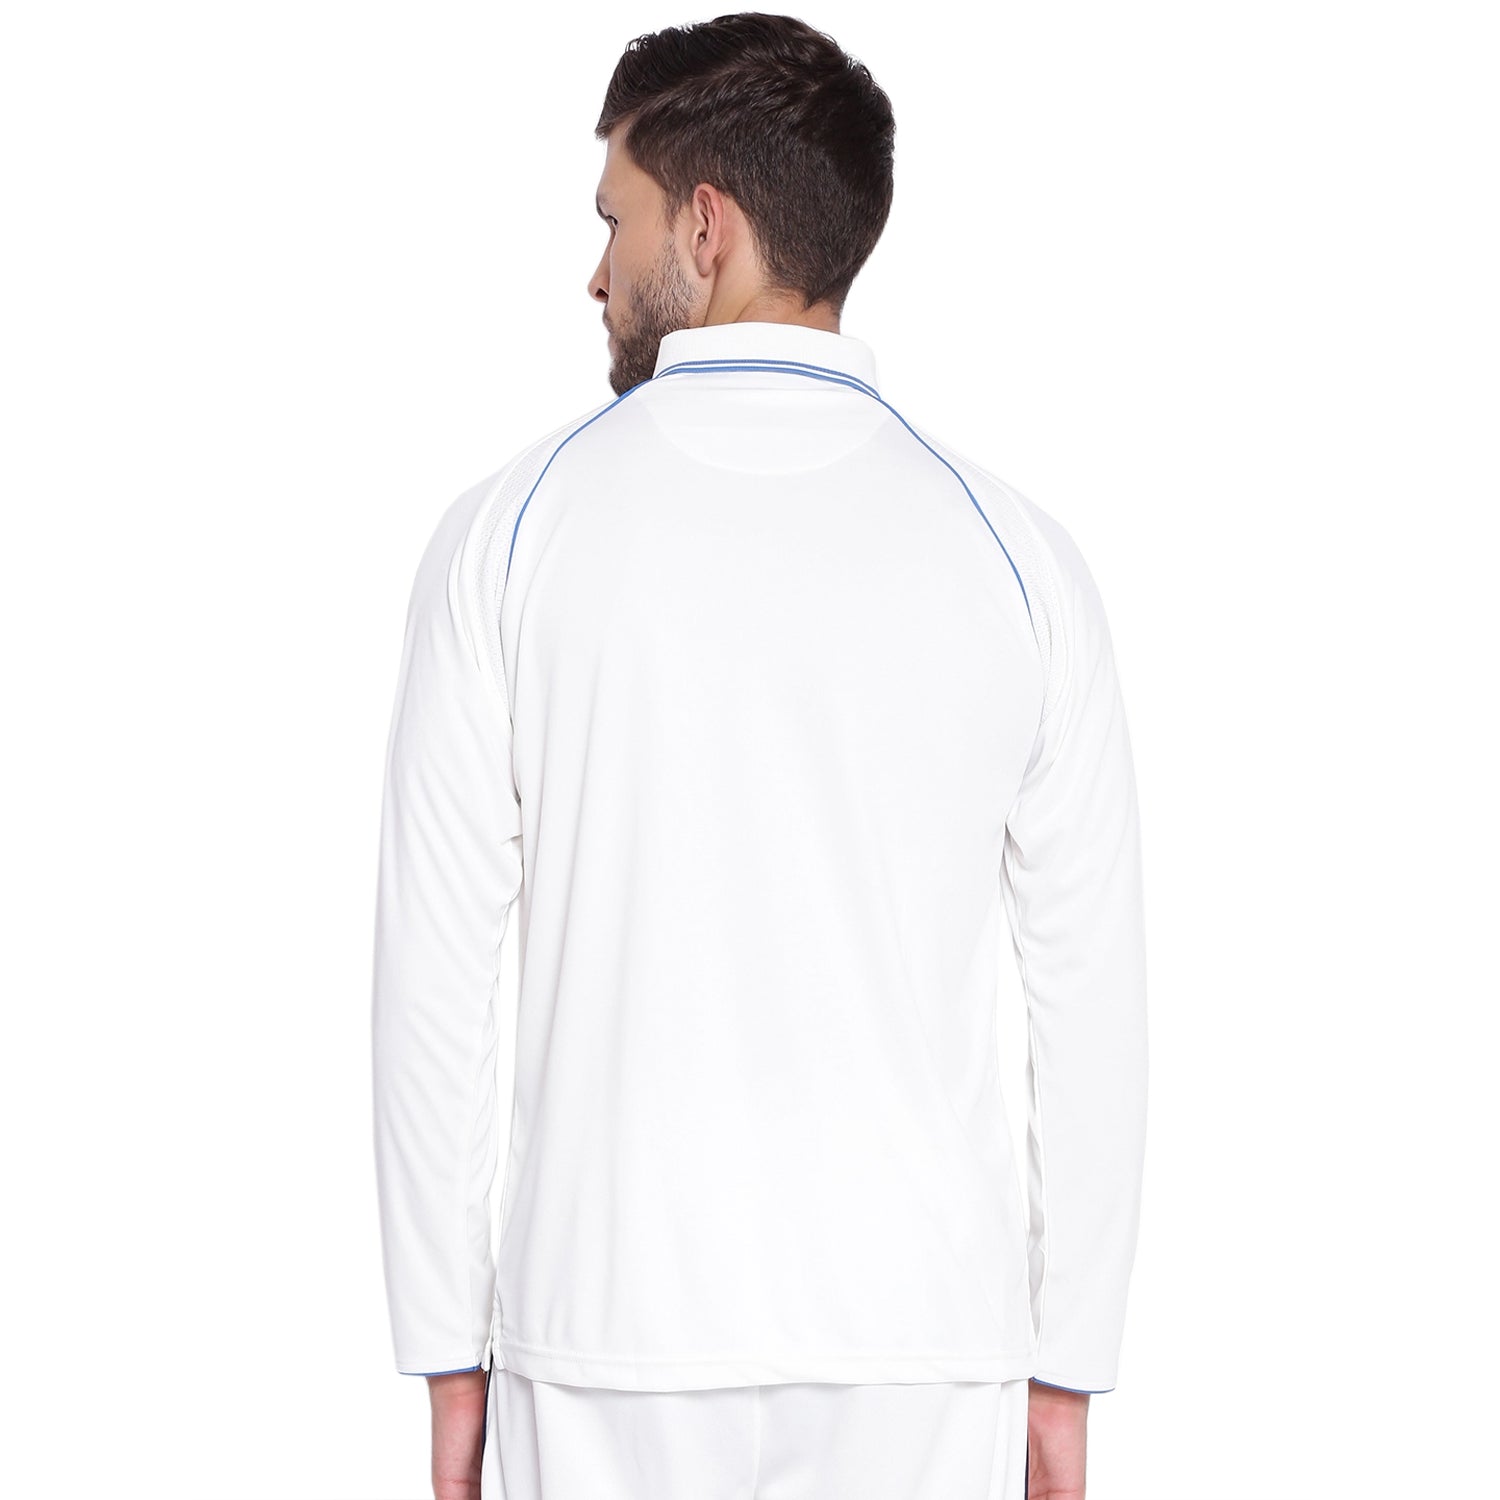 SG Premium 2.0 Full Sleeves Cricket Shirt, White - Best Price online Prokicksports.com